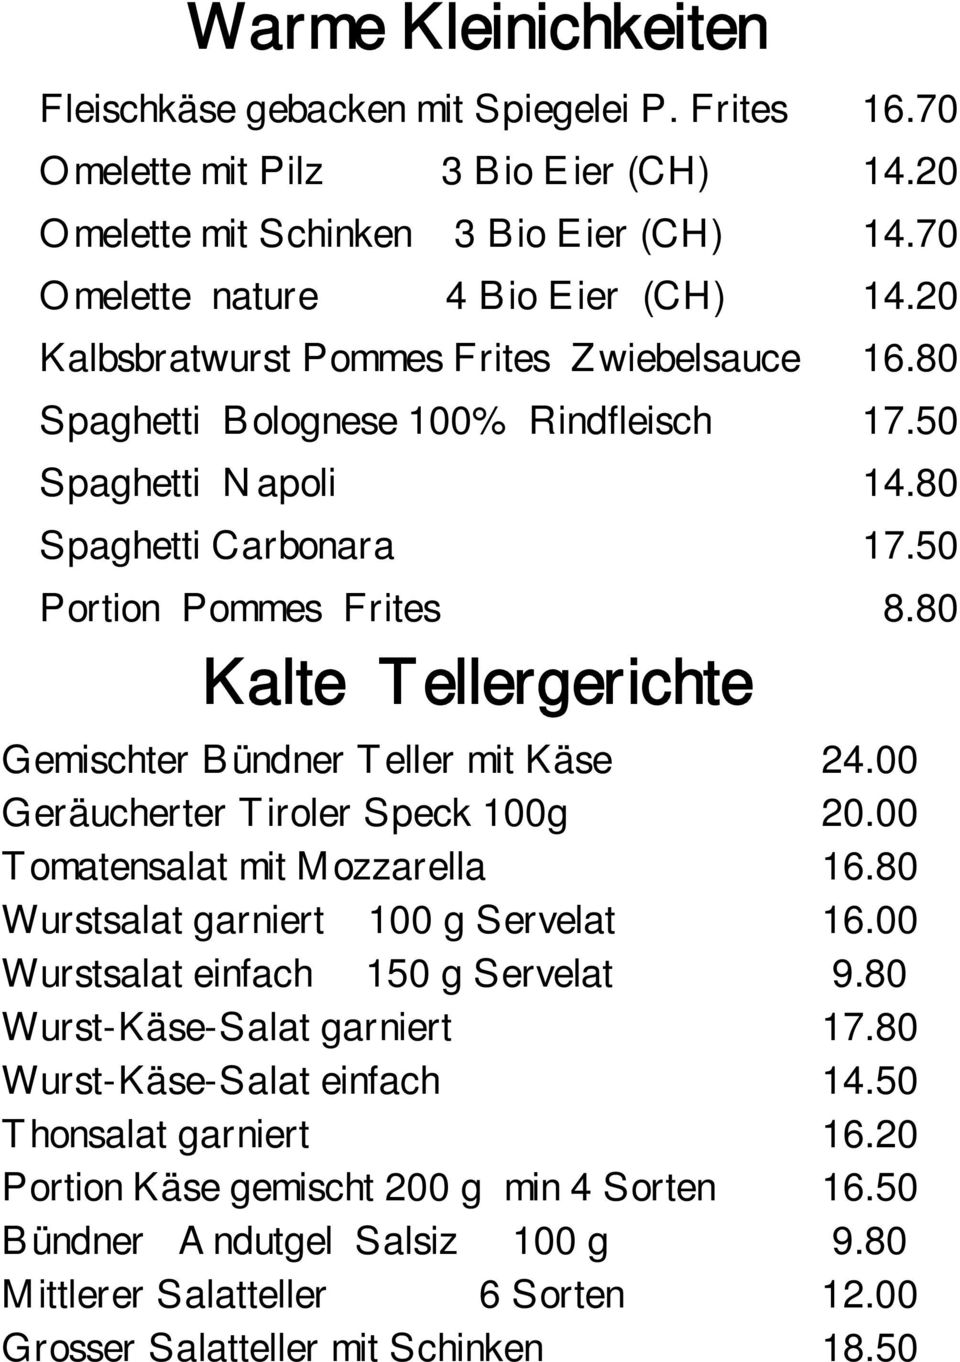 80 Kalte Tellergerichte Gemischter Bündner Teller mit Käse 24.00 Geräucherter Tiroler Speck 100g 20.00 Tomatensalat mit Mozzarella 16.80 Wurstsalat garniert 100 g Servelat 16.